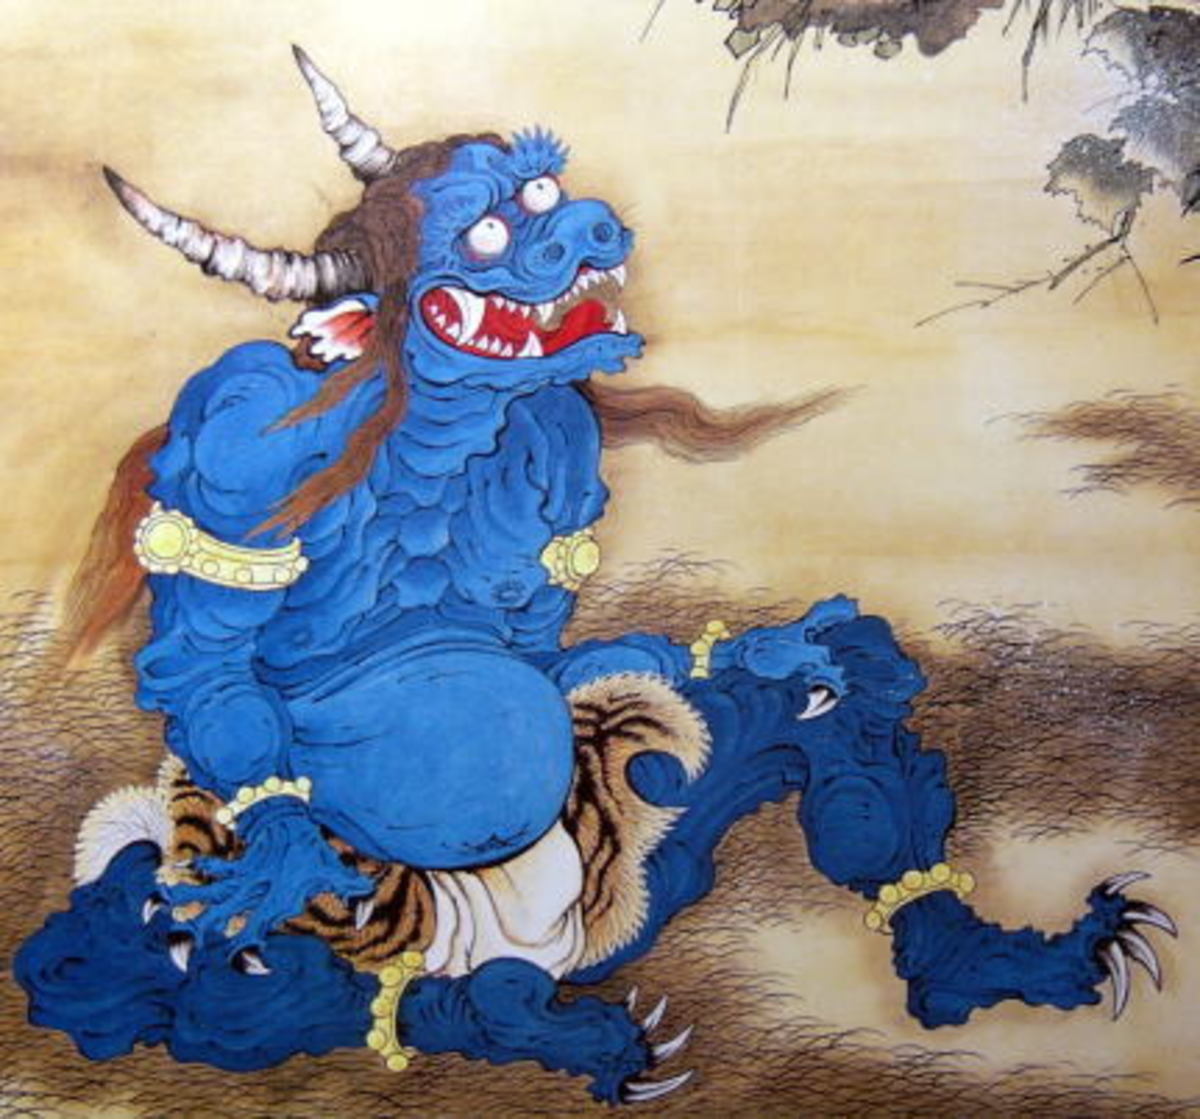 The Japanese ogre Oni.